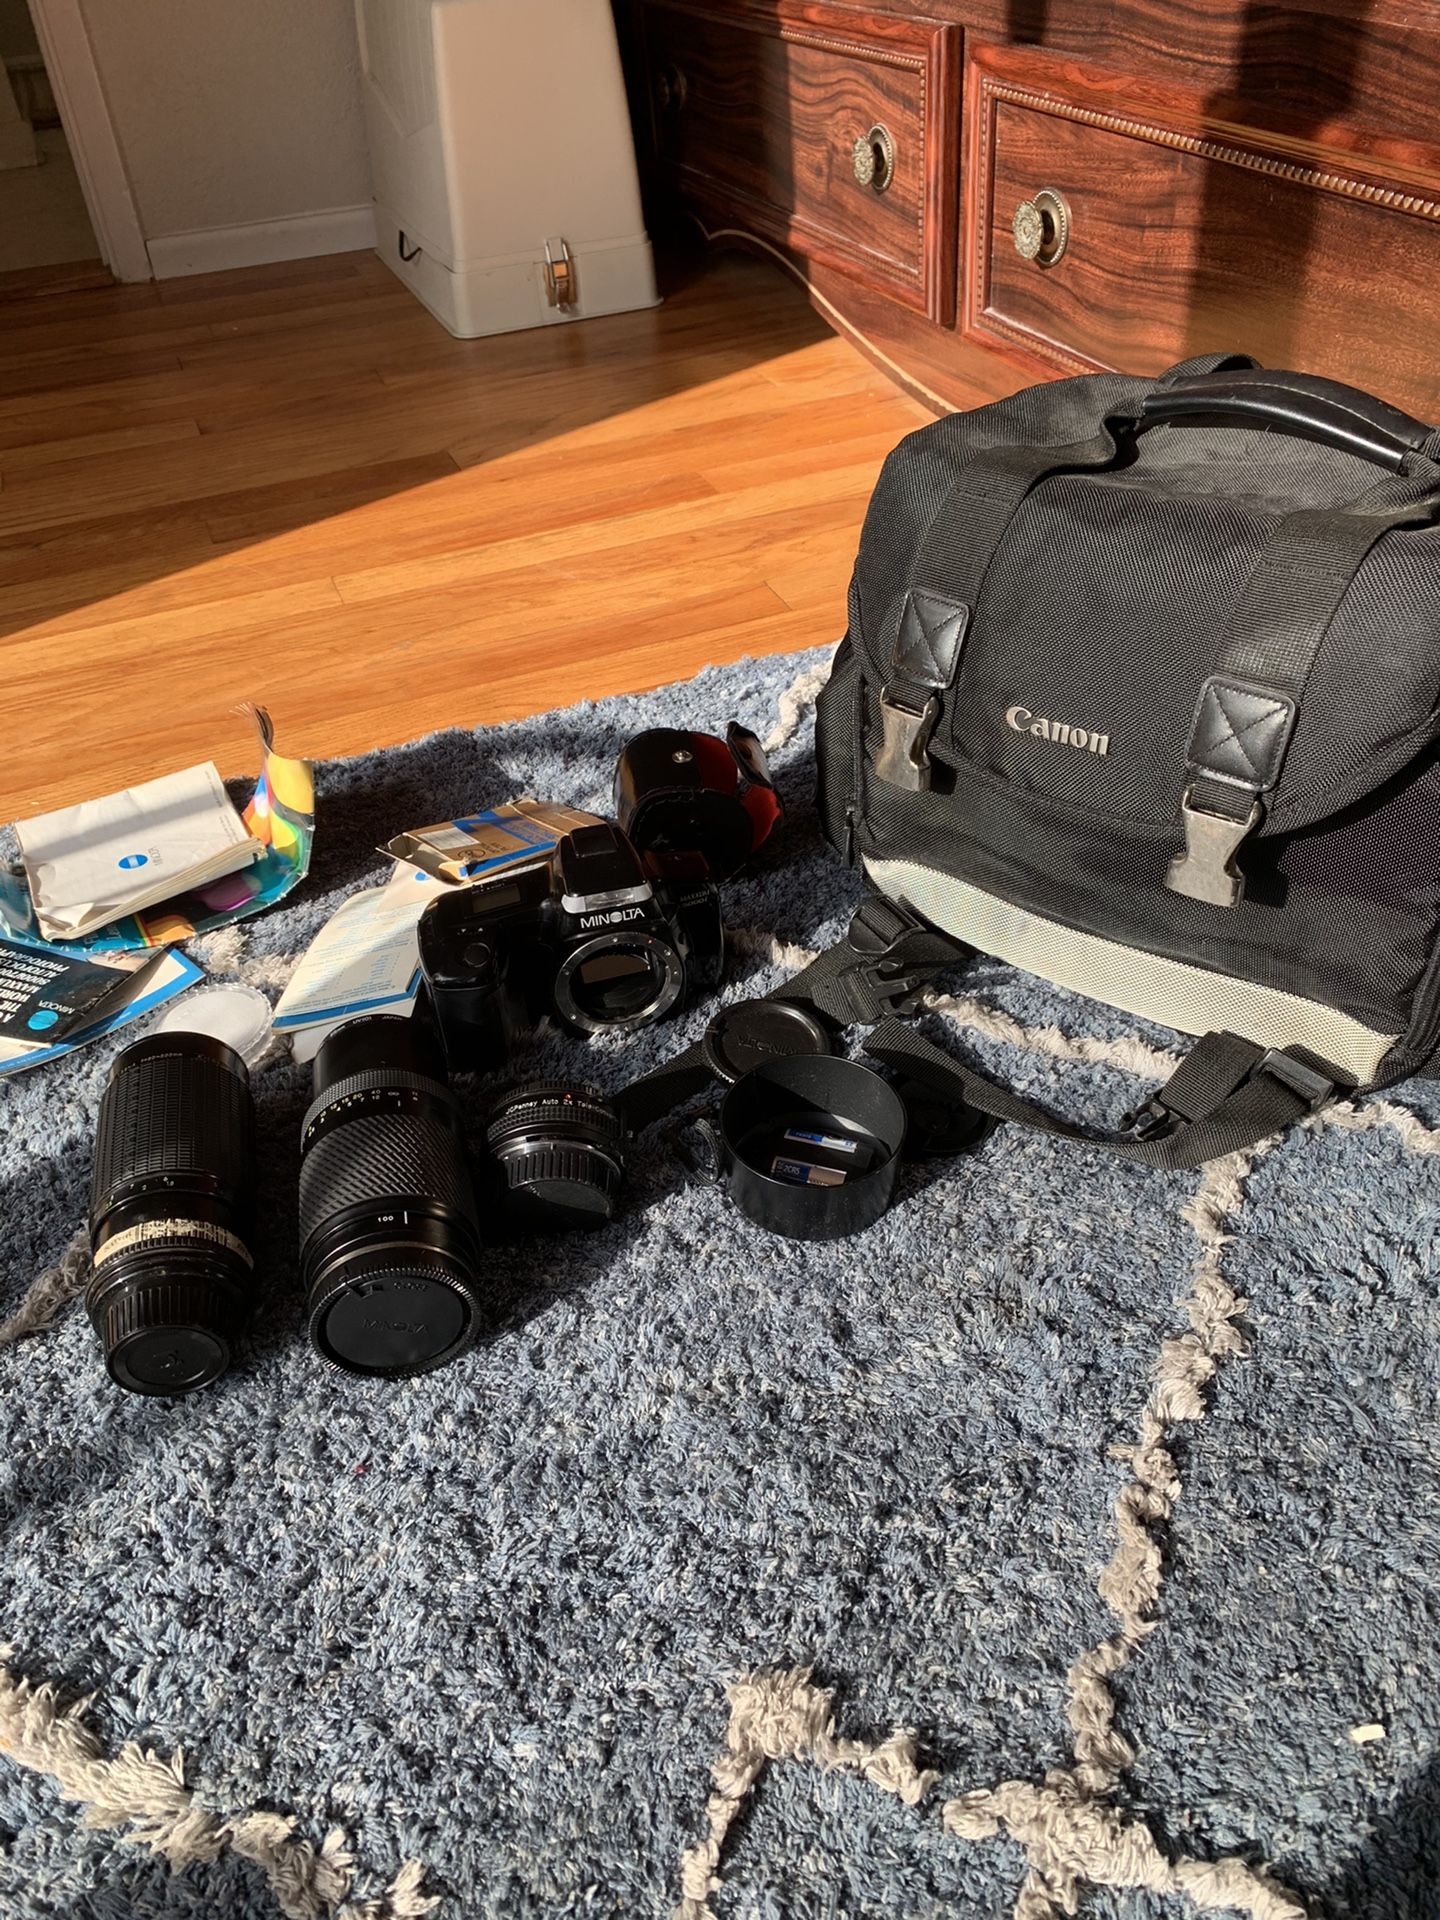 Camera bag with camera and lenses